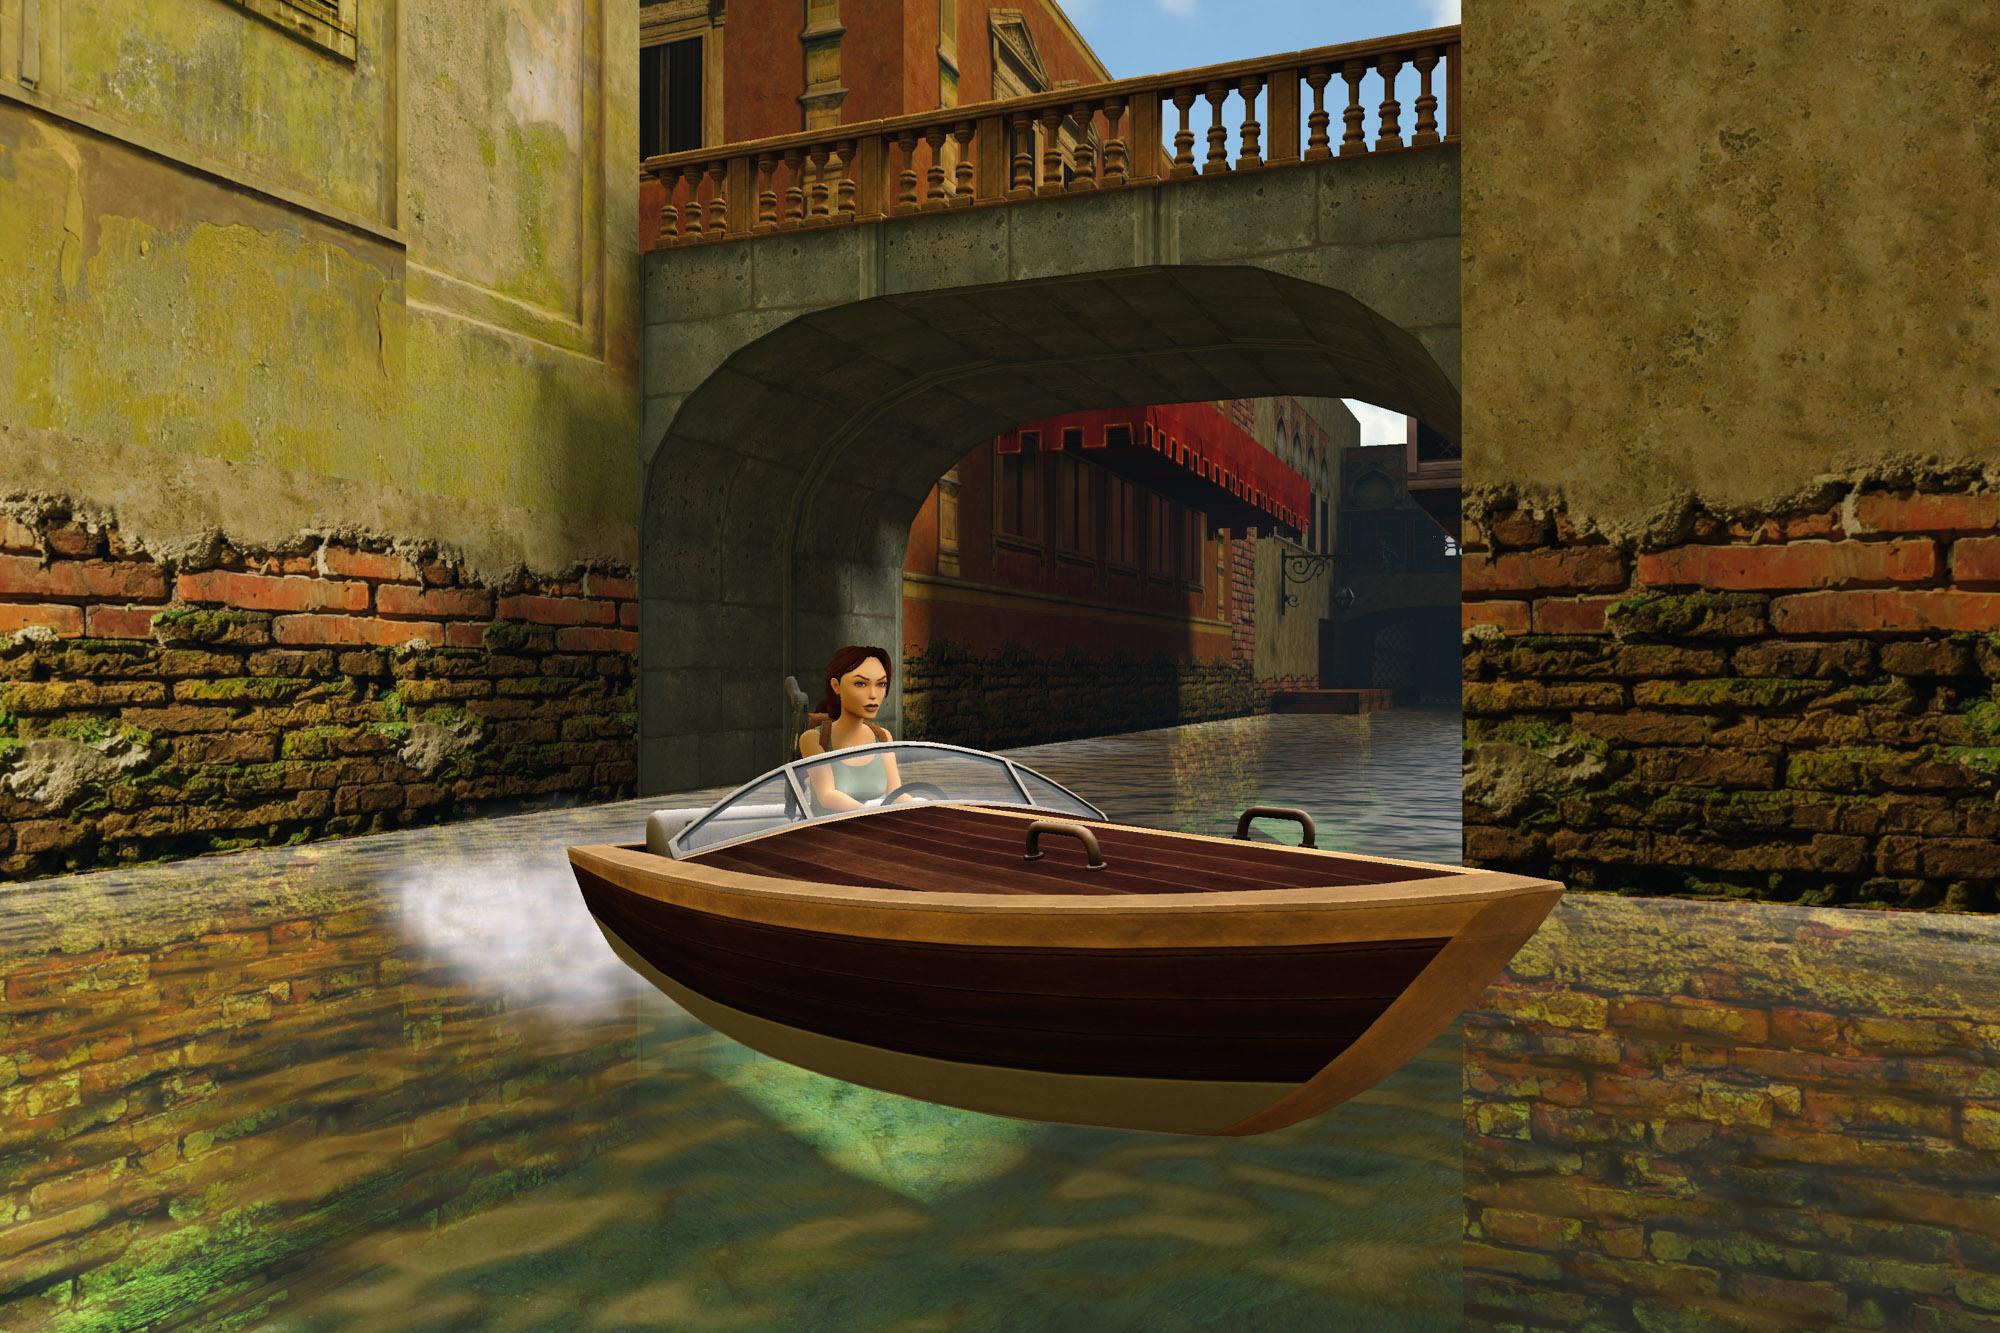 Lara speeding through a canal in Venice in a motorboat